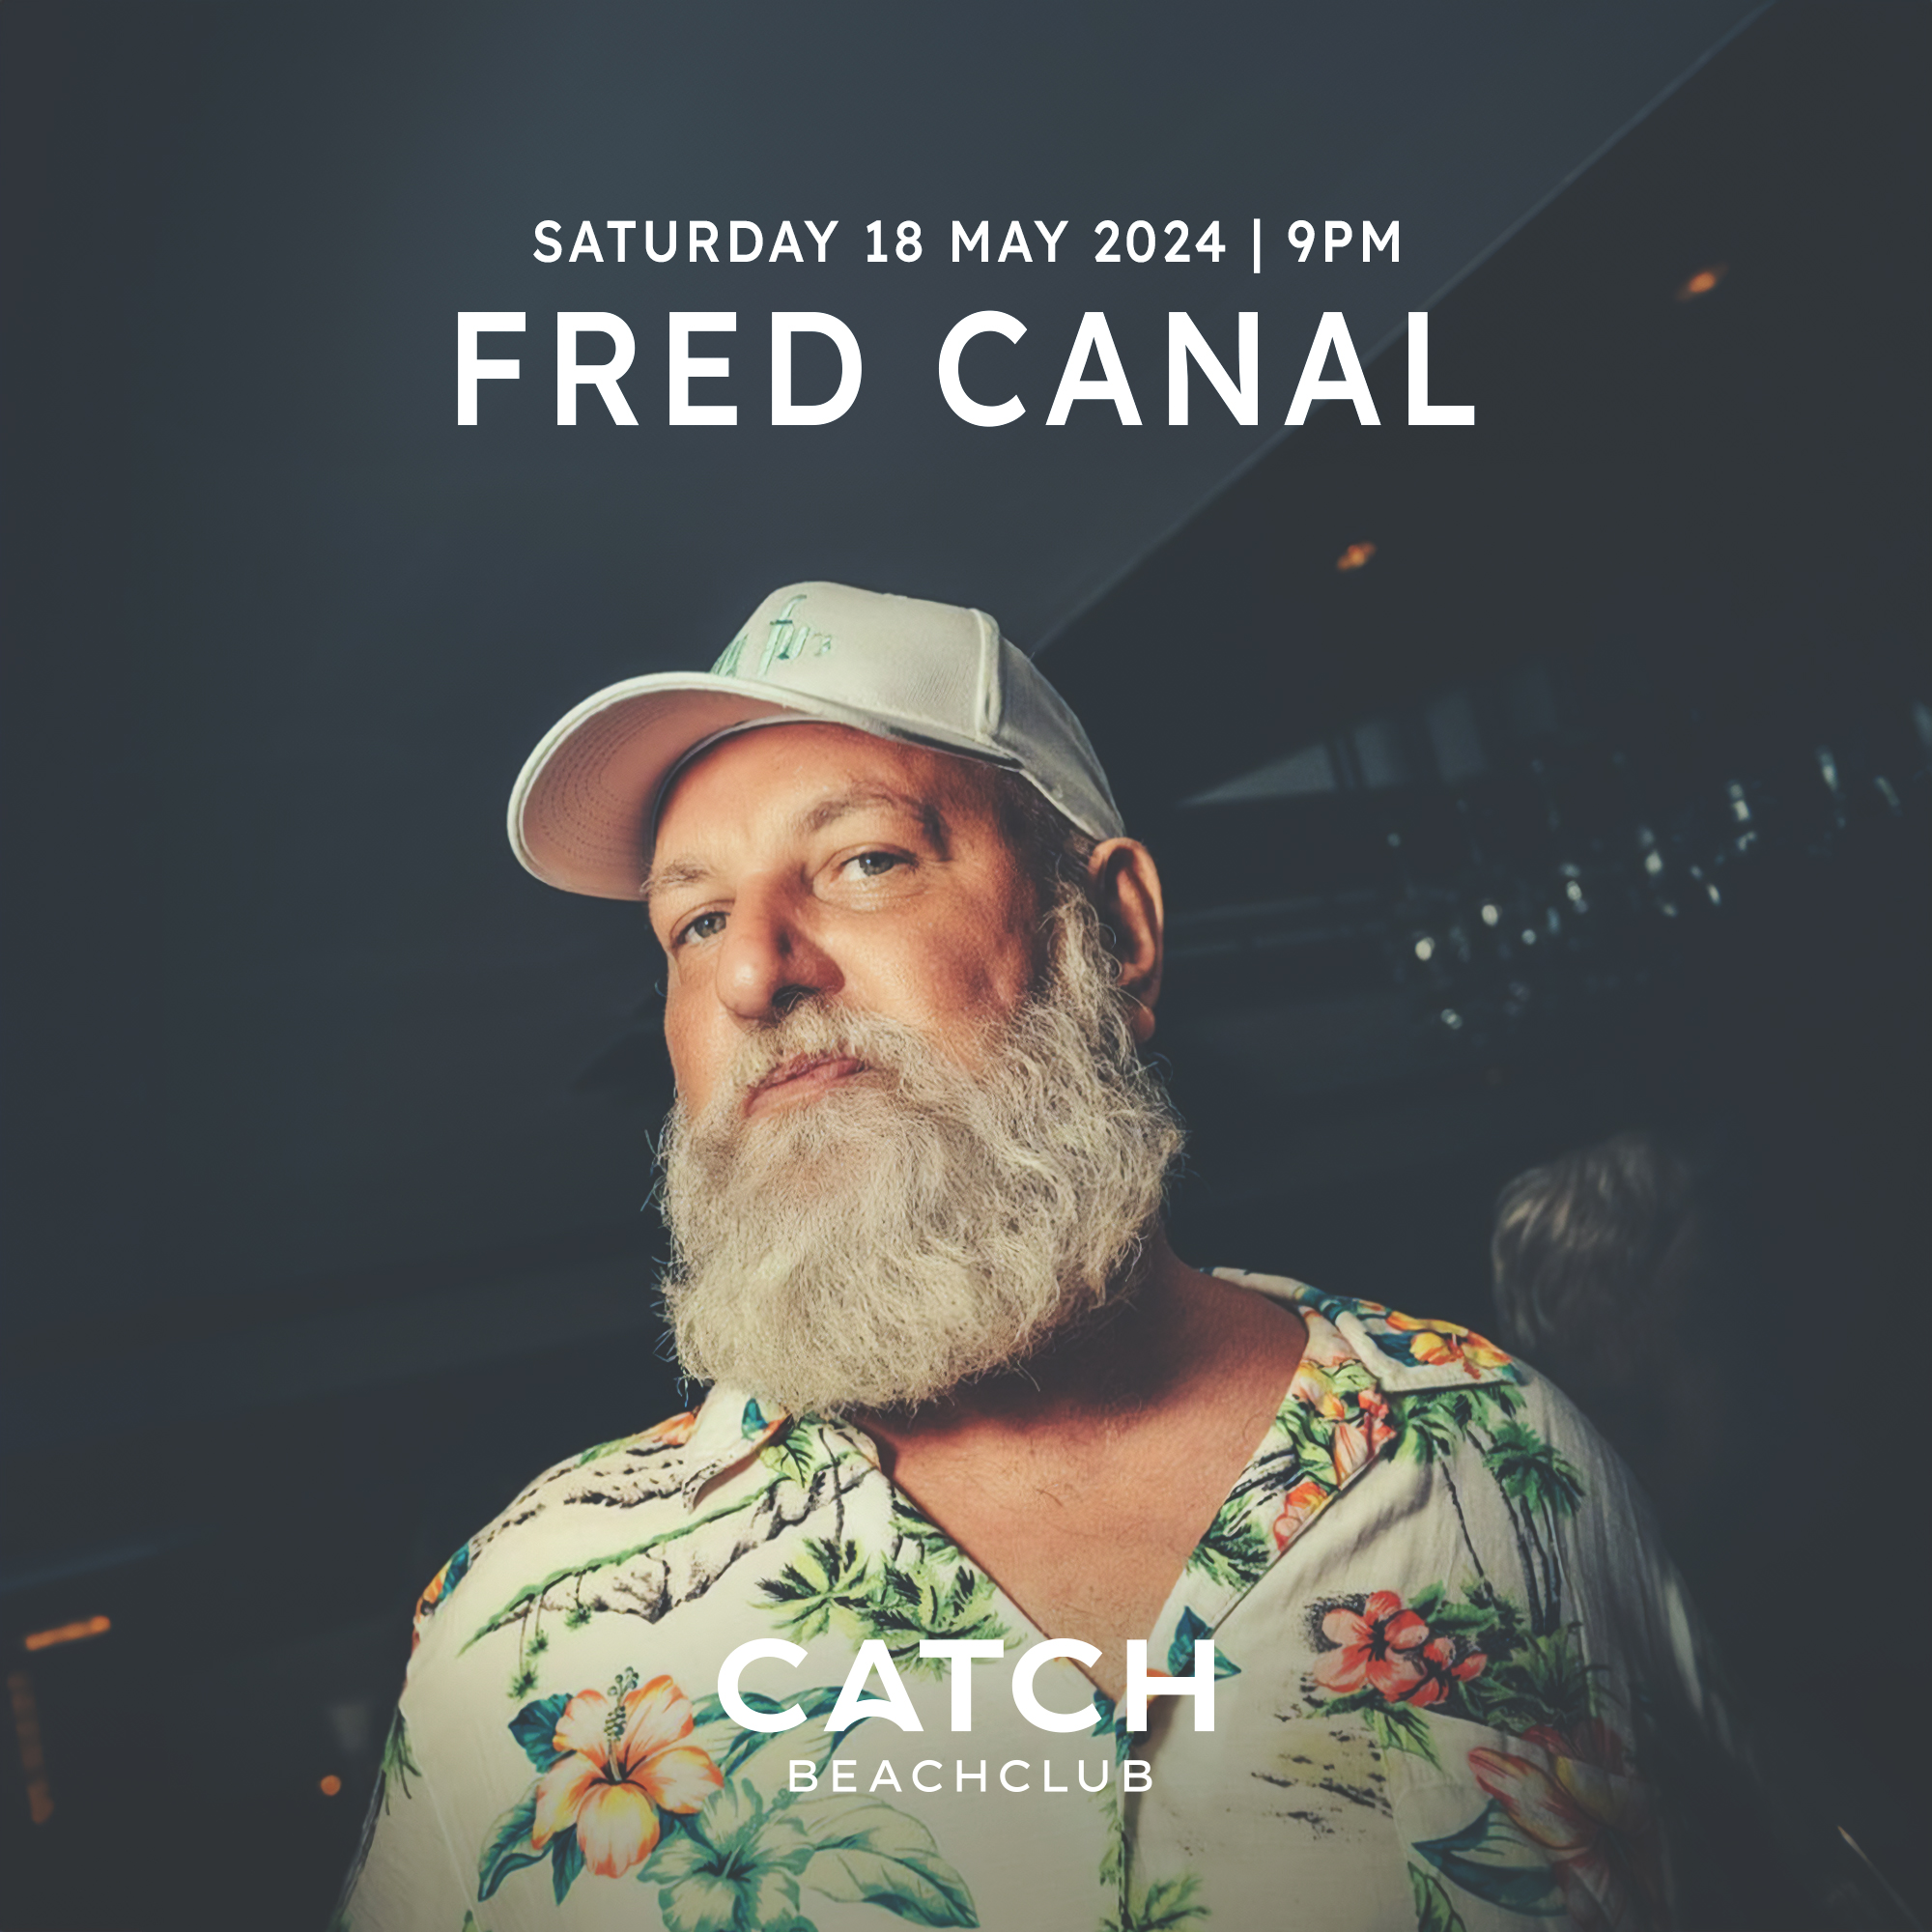 FRED CANAL CATCH BEACH CLUB